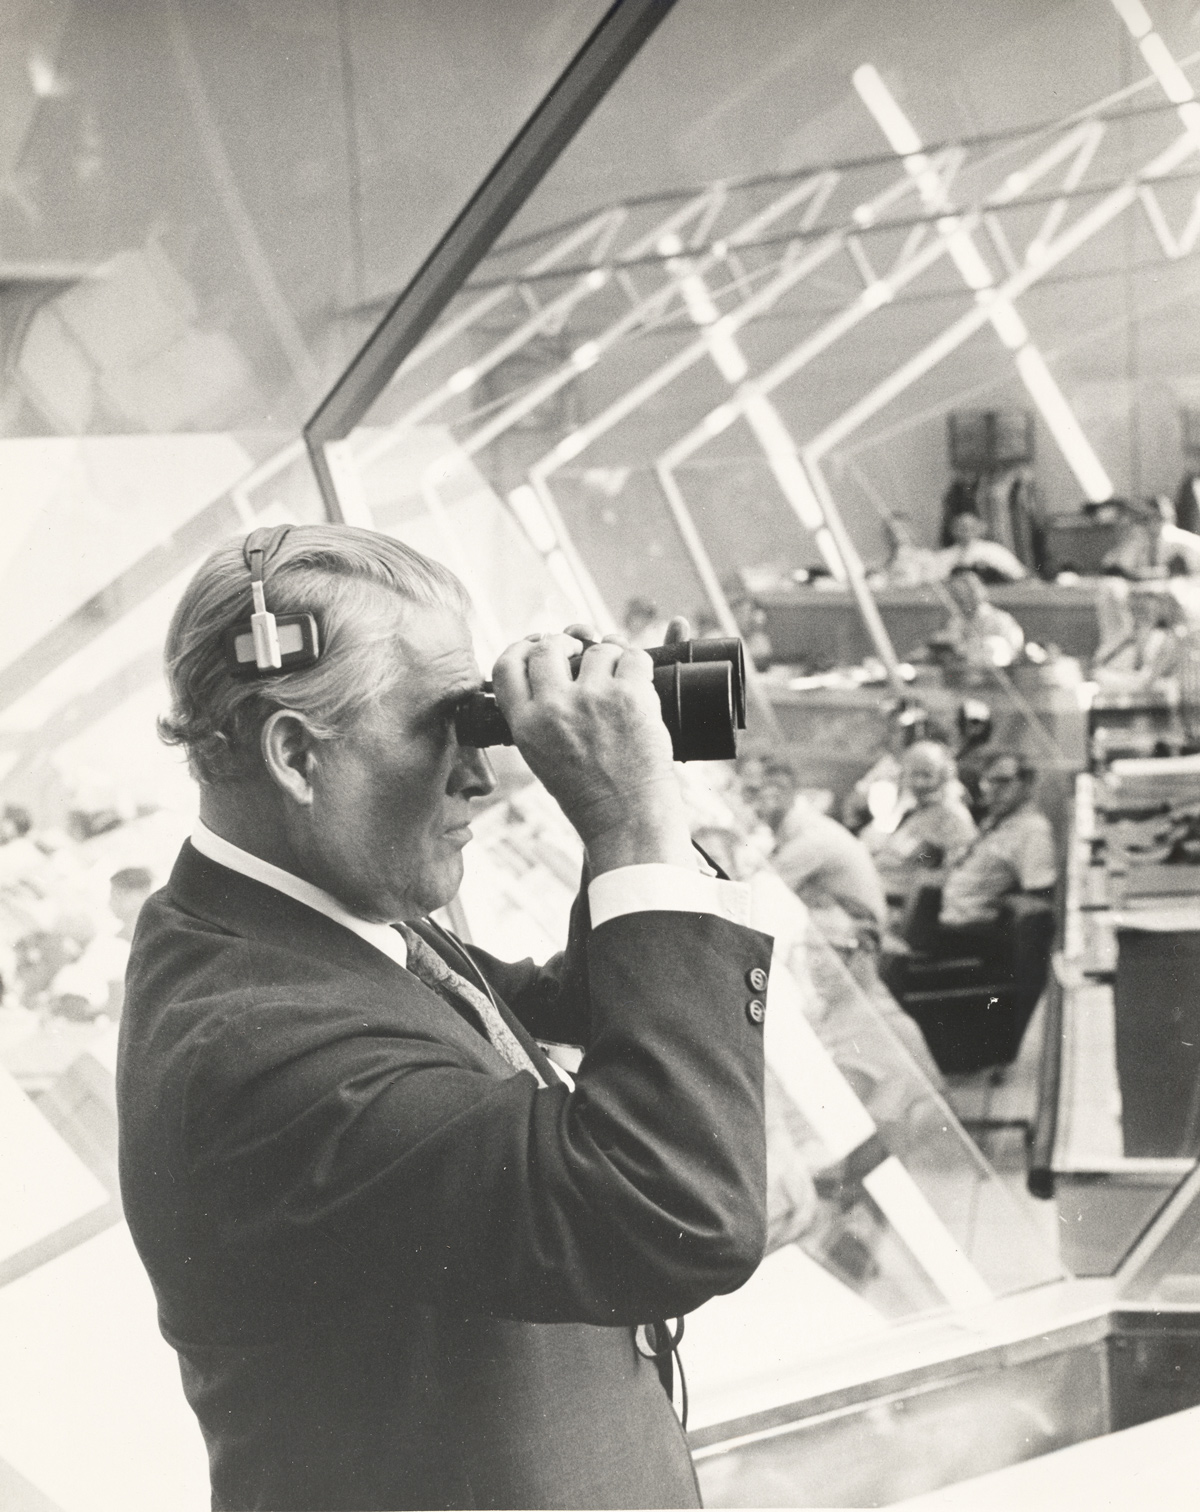 Man wearing formal suit and looking through binoculars, indoors